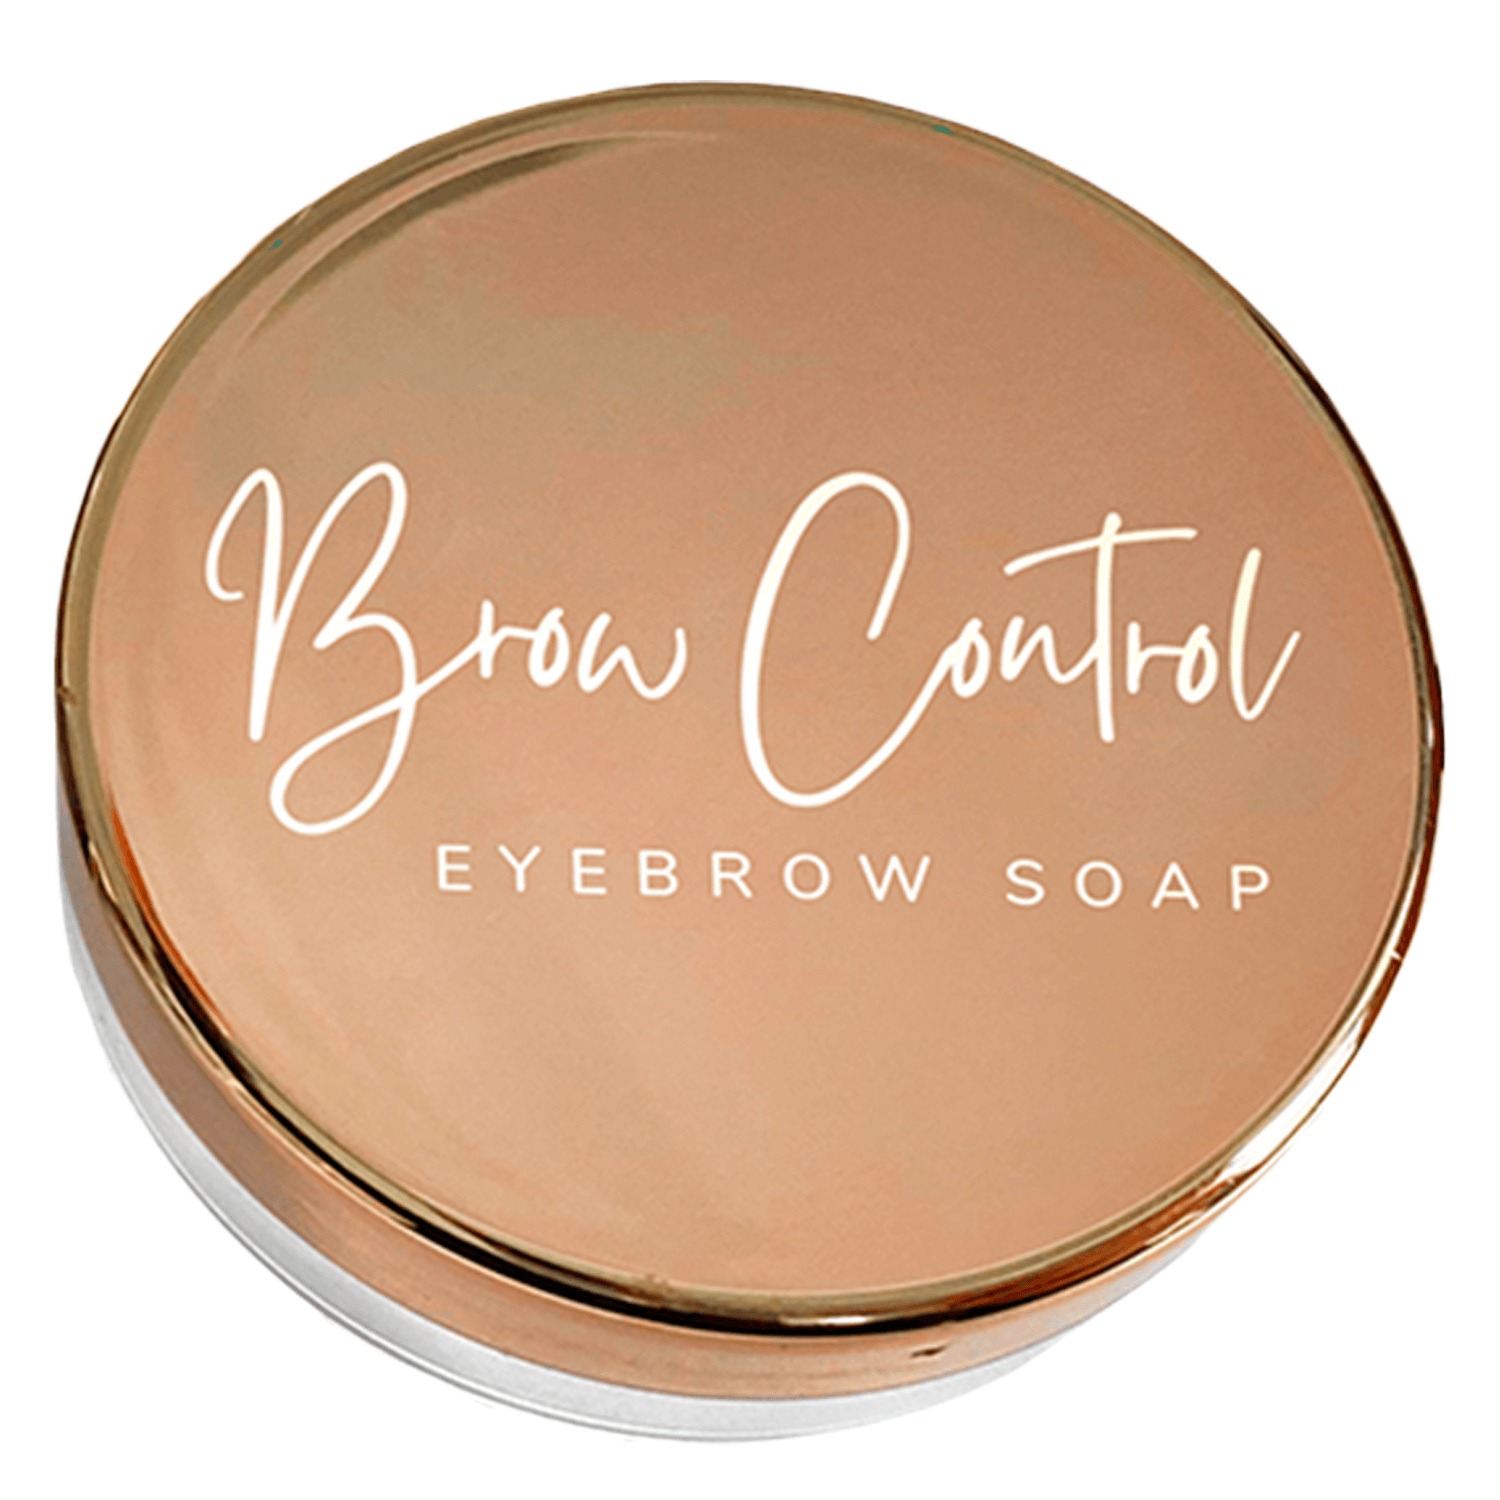 Image du produit de GL Beautycompany - Brow Control Styling Soap